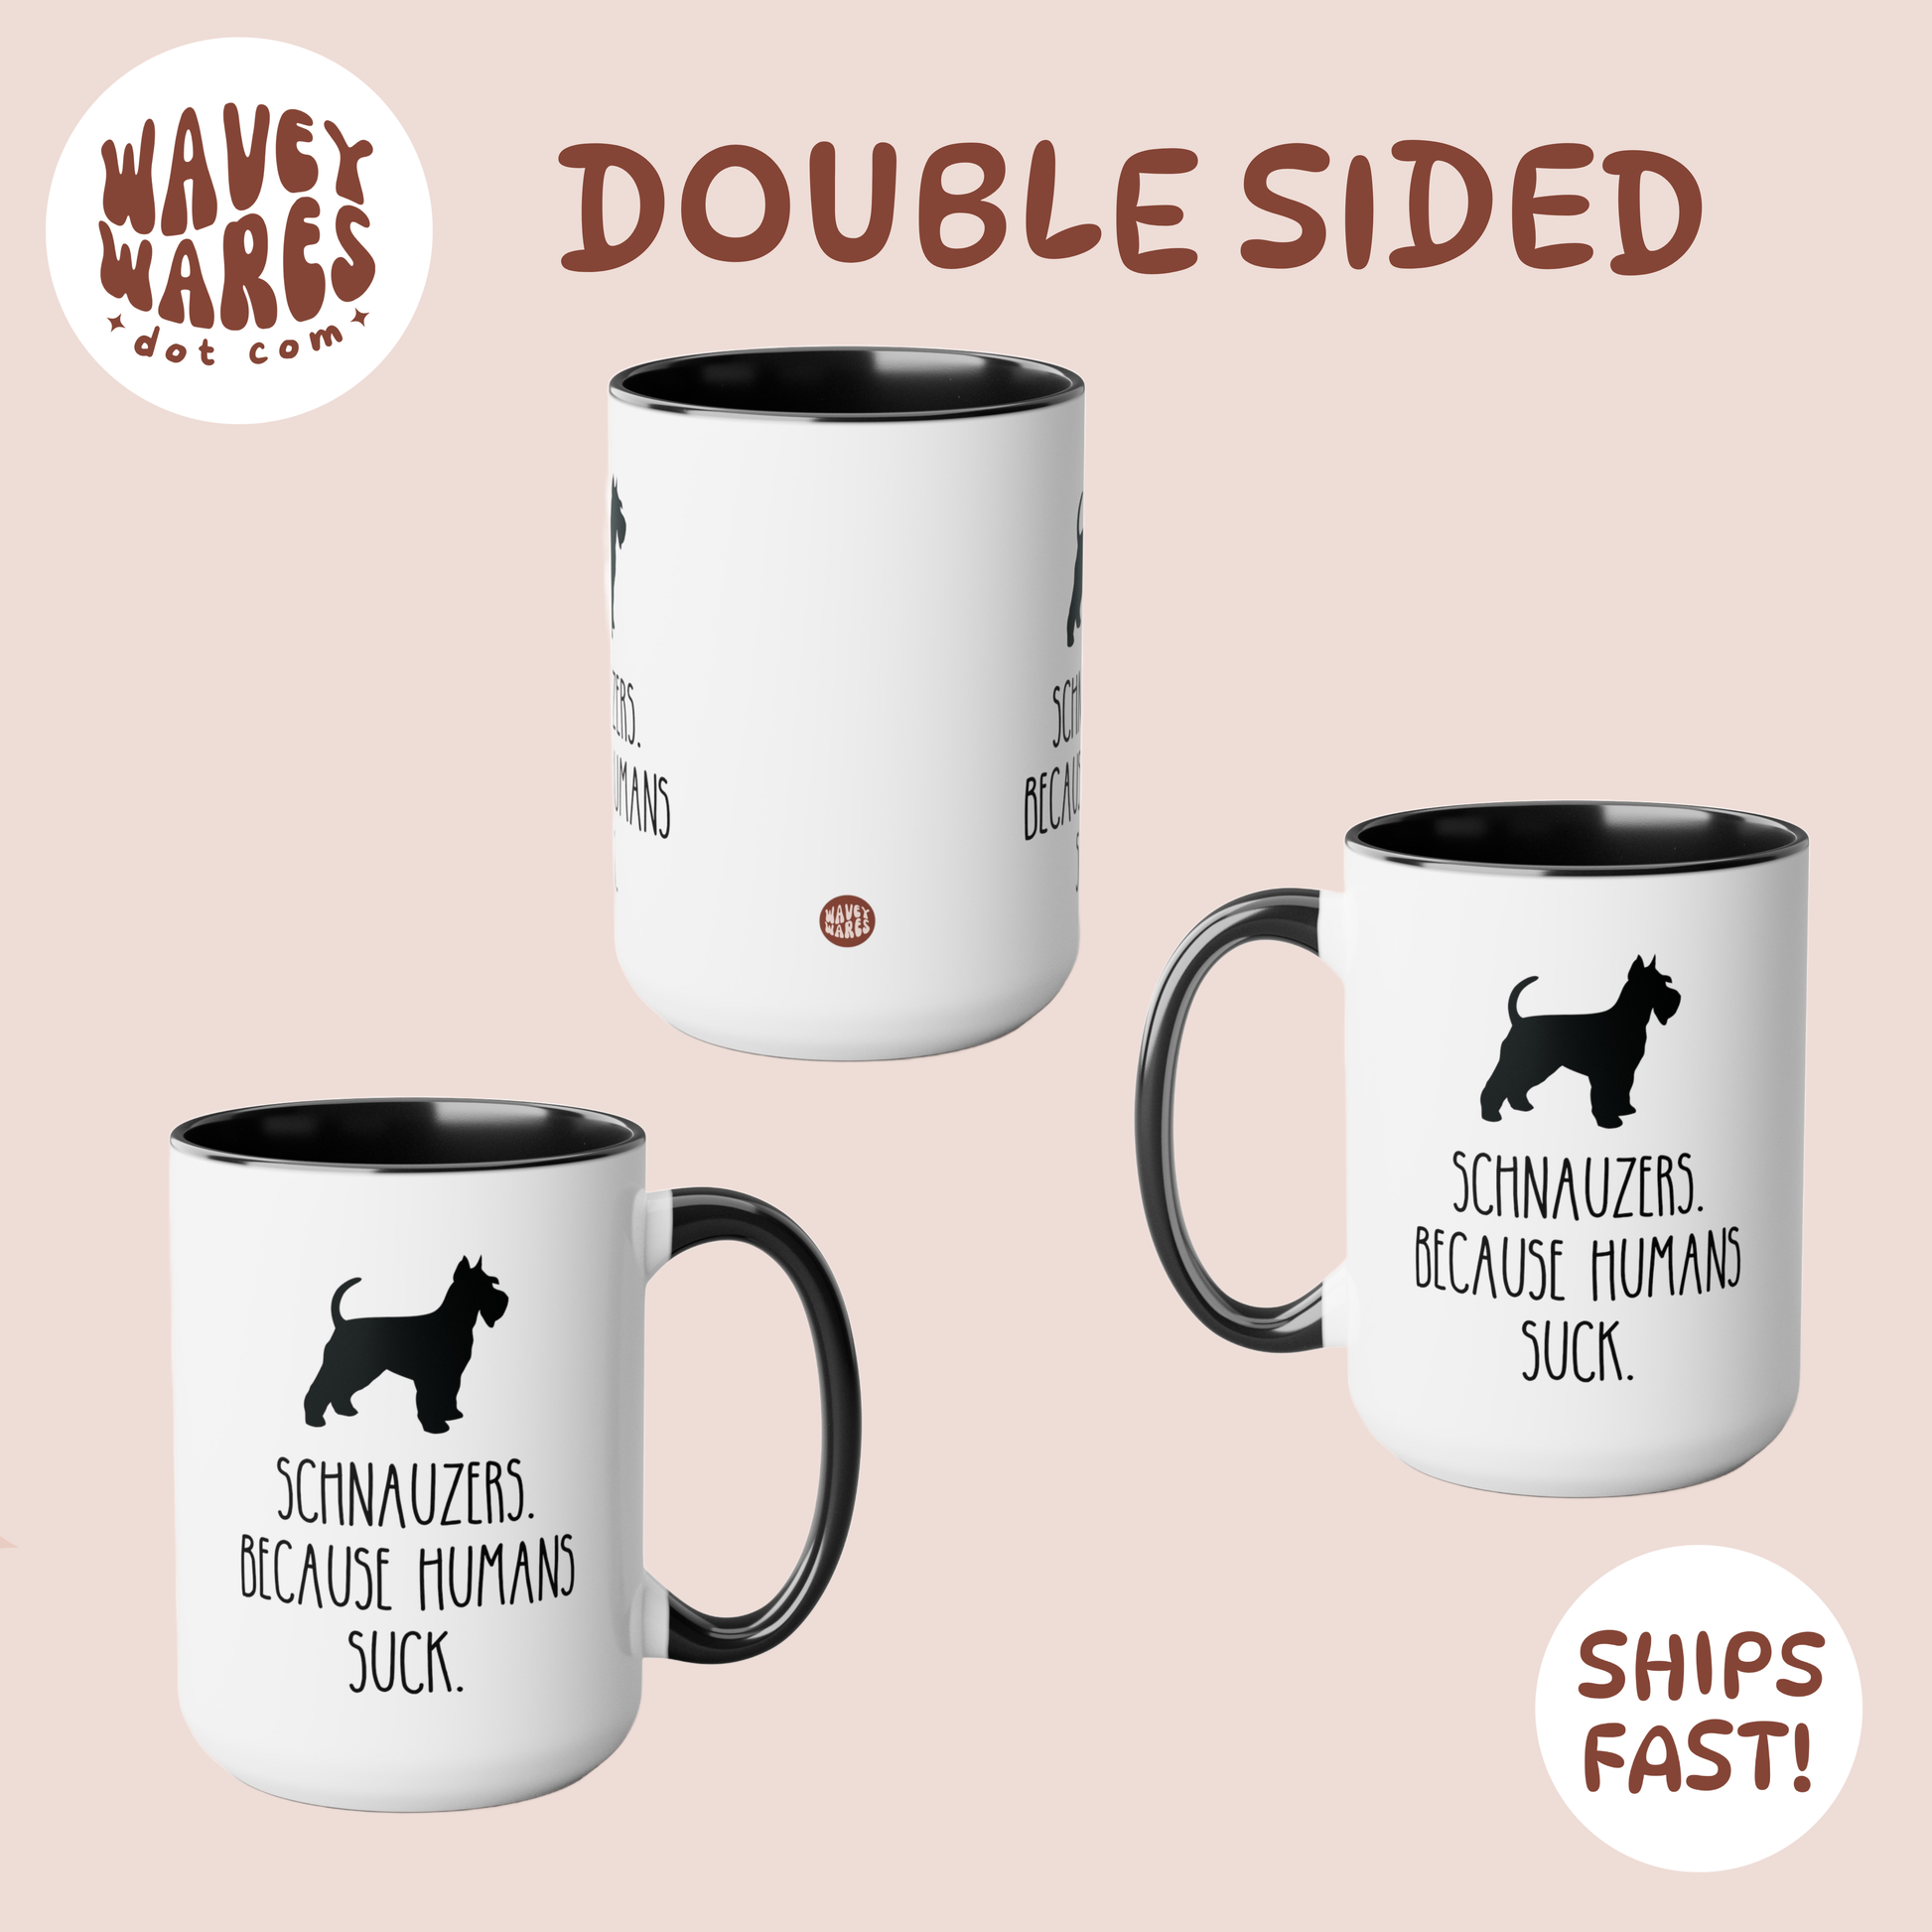 double sided background coffee mug waveywares wavey wares wavywares wavy wares